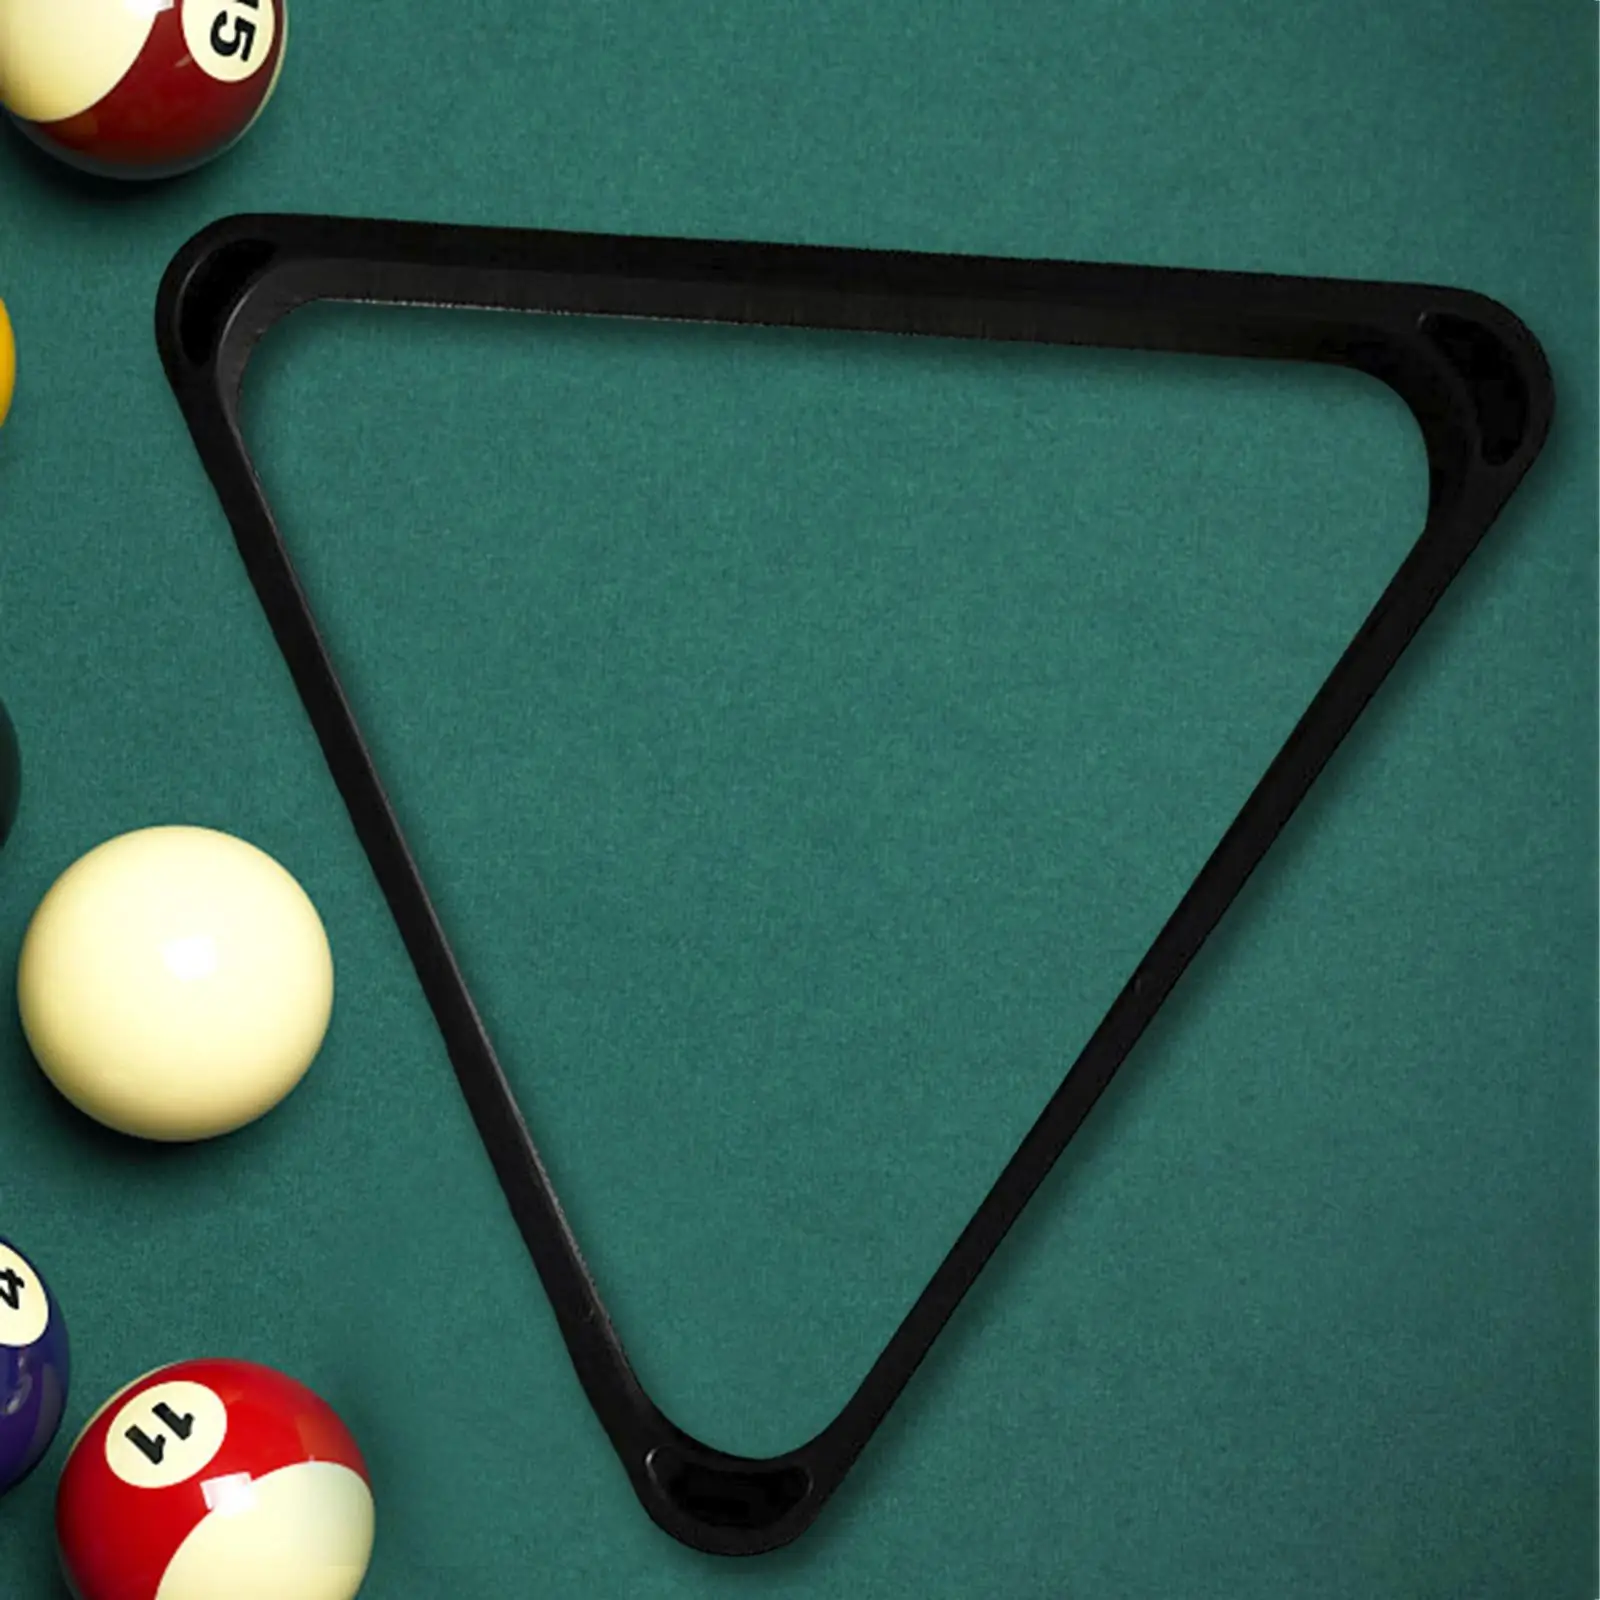 Billiard Triangle Ball Rack Organize Holder Pool Rack Pool for 2 1/4